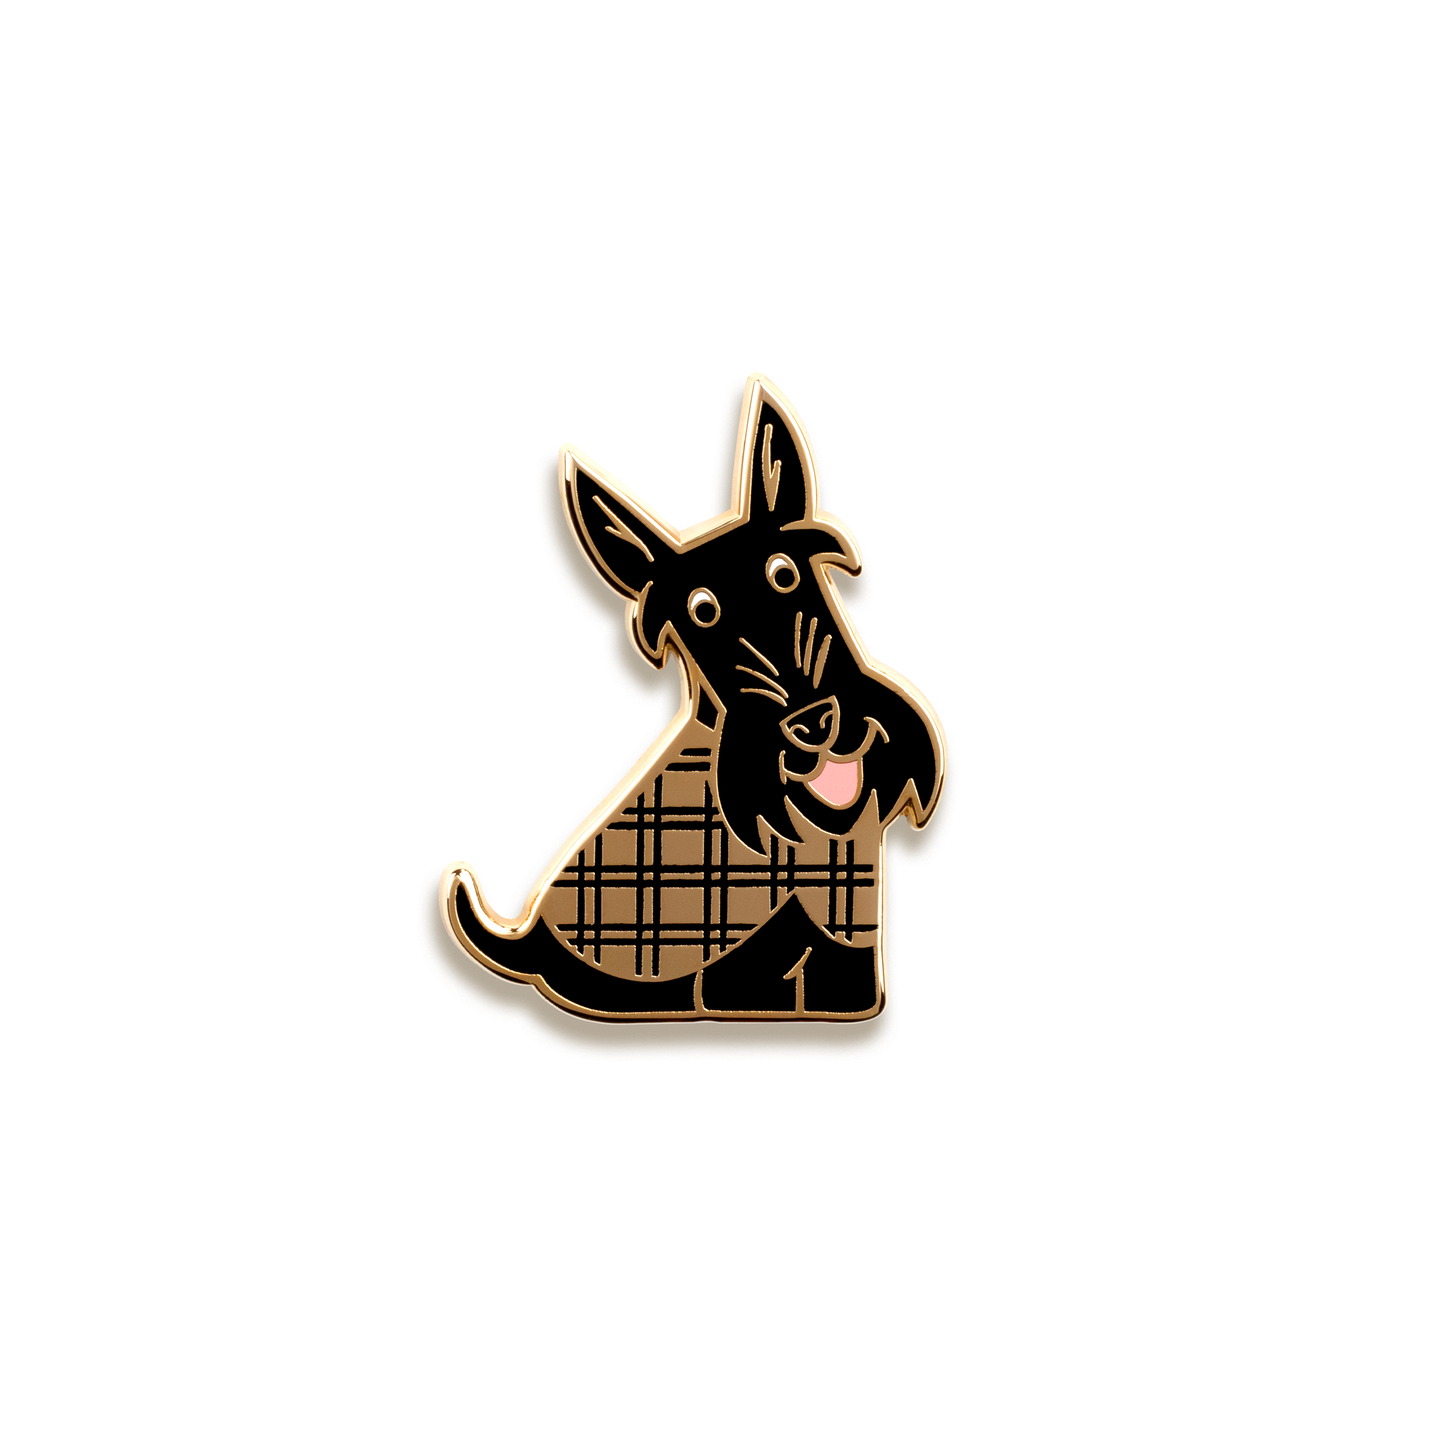 Scottish Terrier Enamel Pin by Doggie Drawings